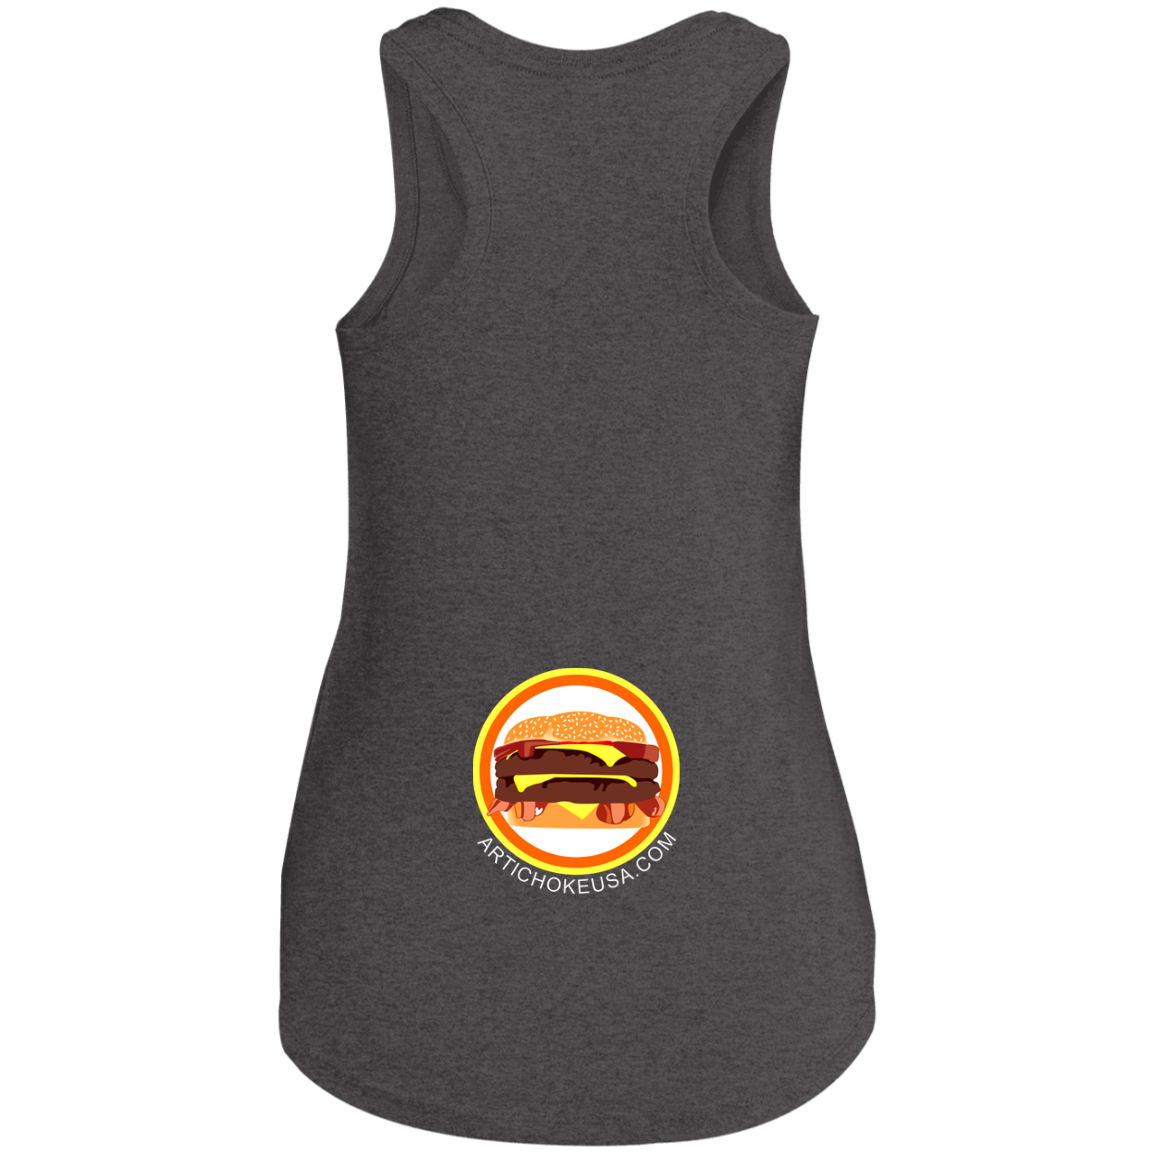 ArtichokeUSA Custom Design. Best Friends Forever. Bacon Cheese Burger. Ladies' Tri Racerback Tank